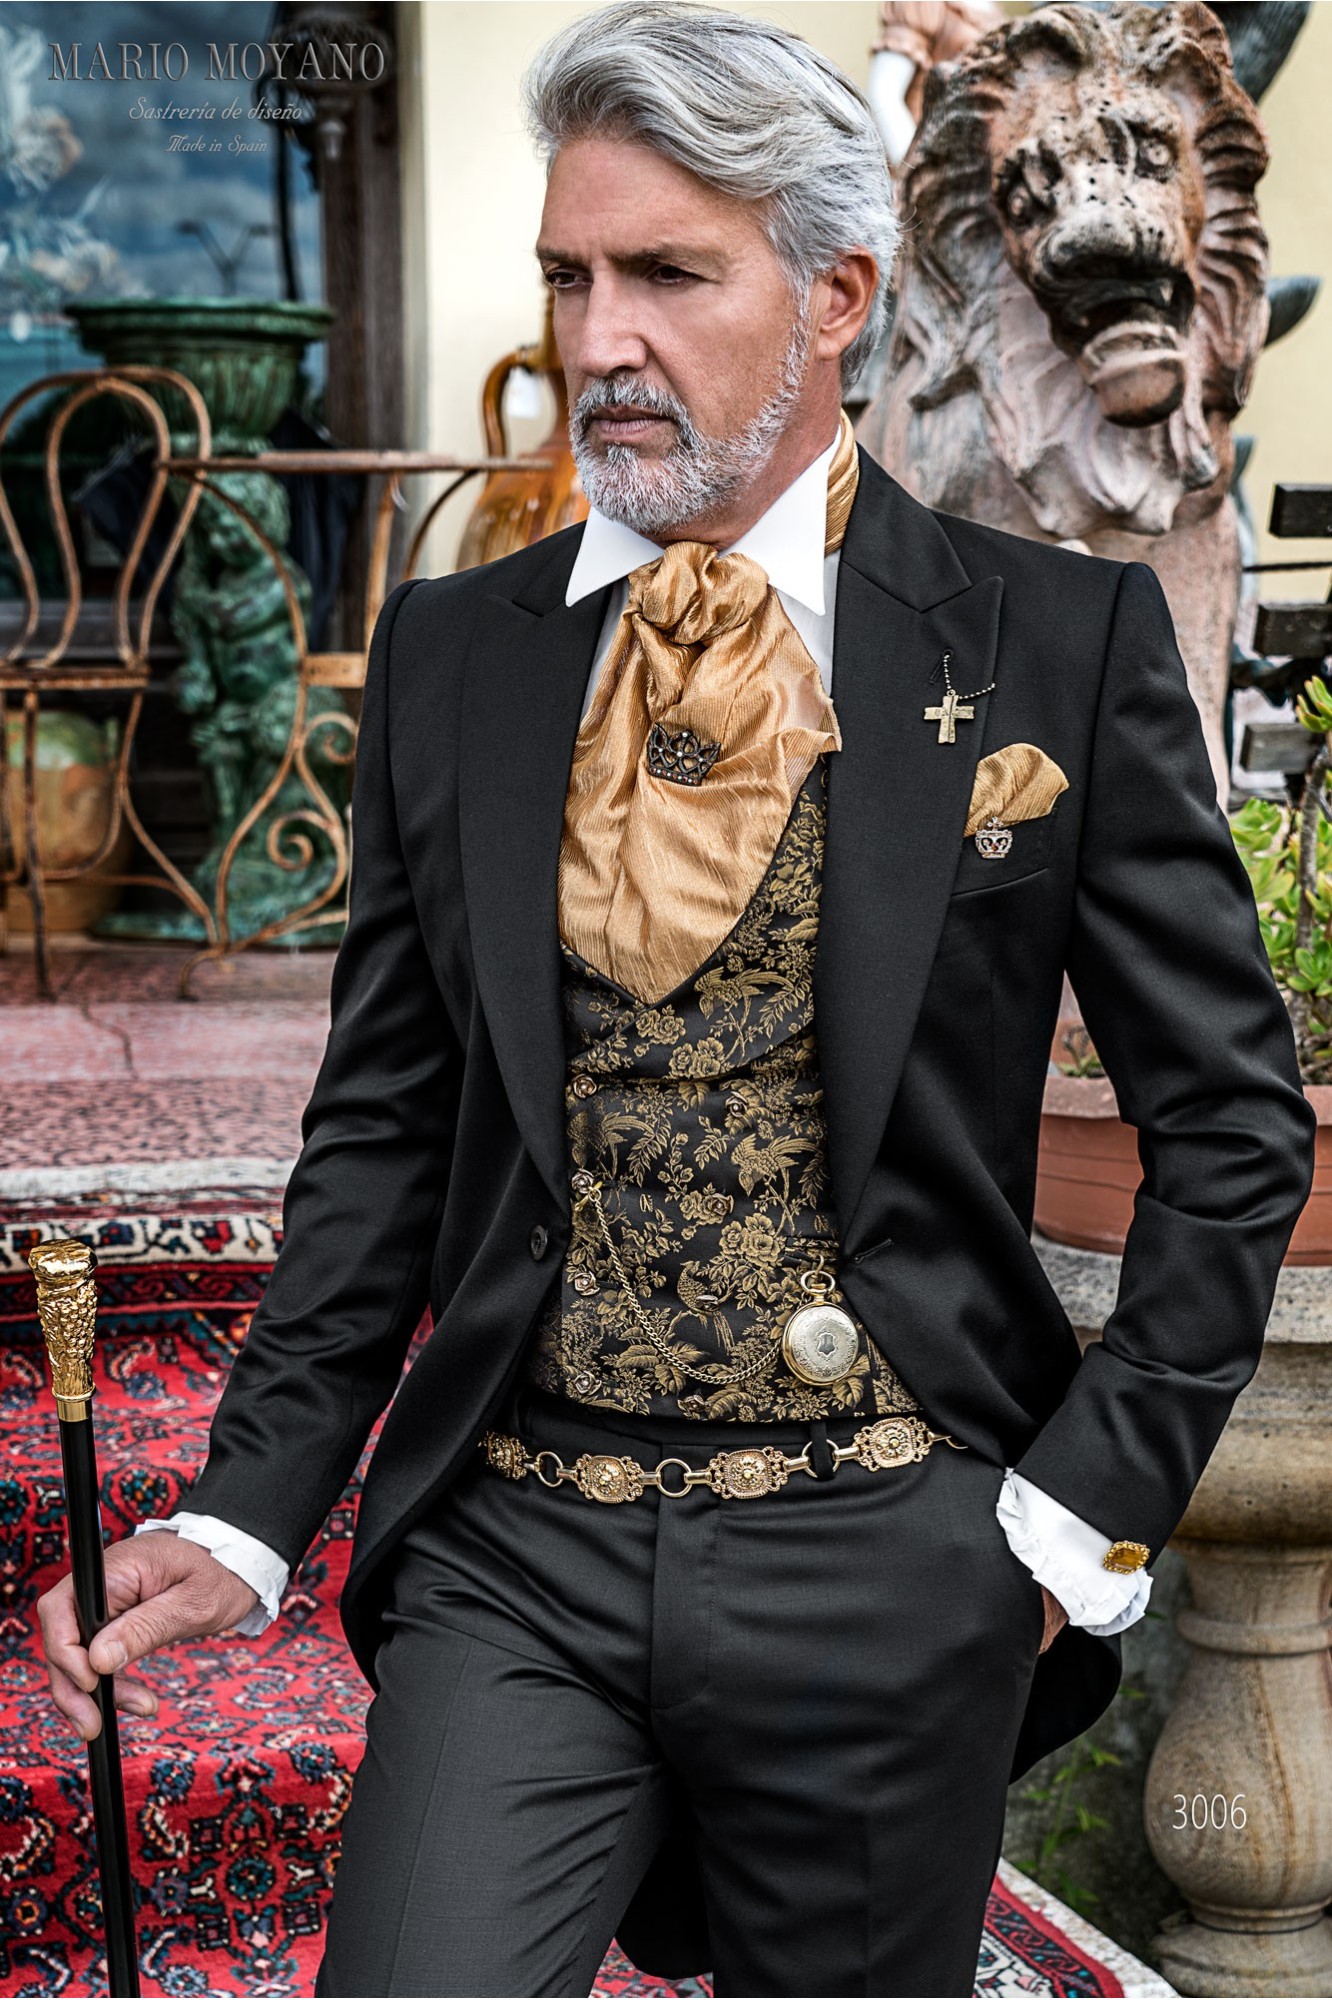 destillation sadel om forladelse Victorian wedding suit frock coat in steampunk style 3006 Mario Moyano